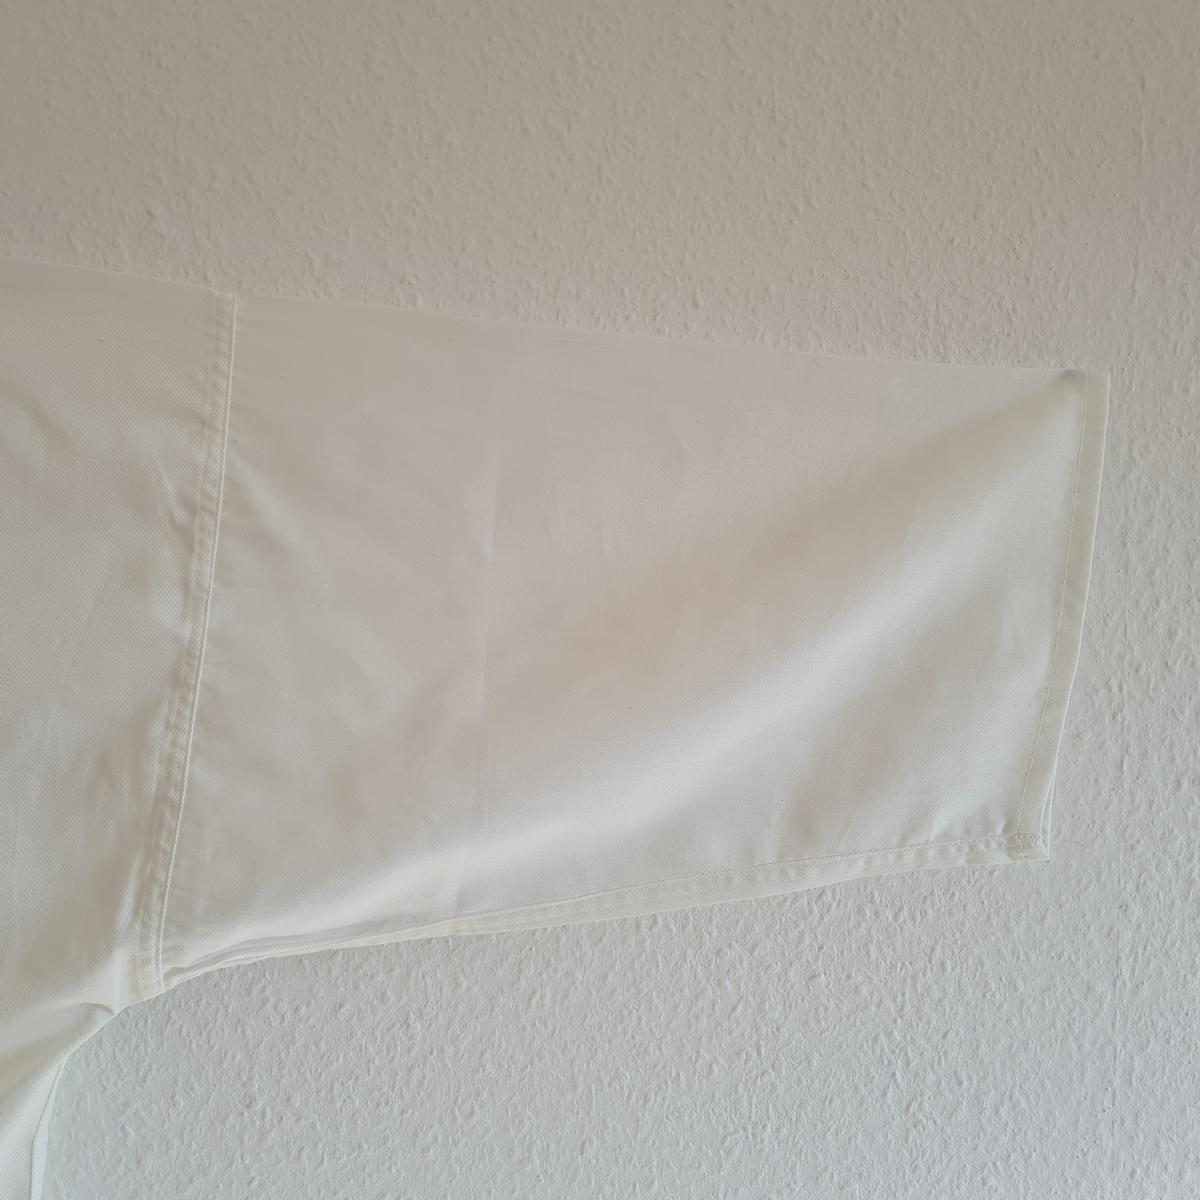 Gi made of cotton - fabric color white - size 160 cm ➤ www.bokken-shop.de. Gi suitable for Iaido, Aikdo, Kendo, Jodo. Your Budo dealer!